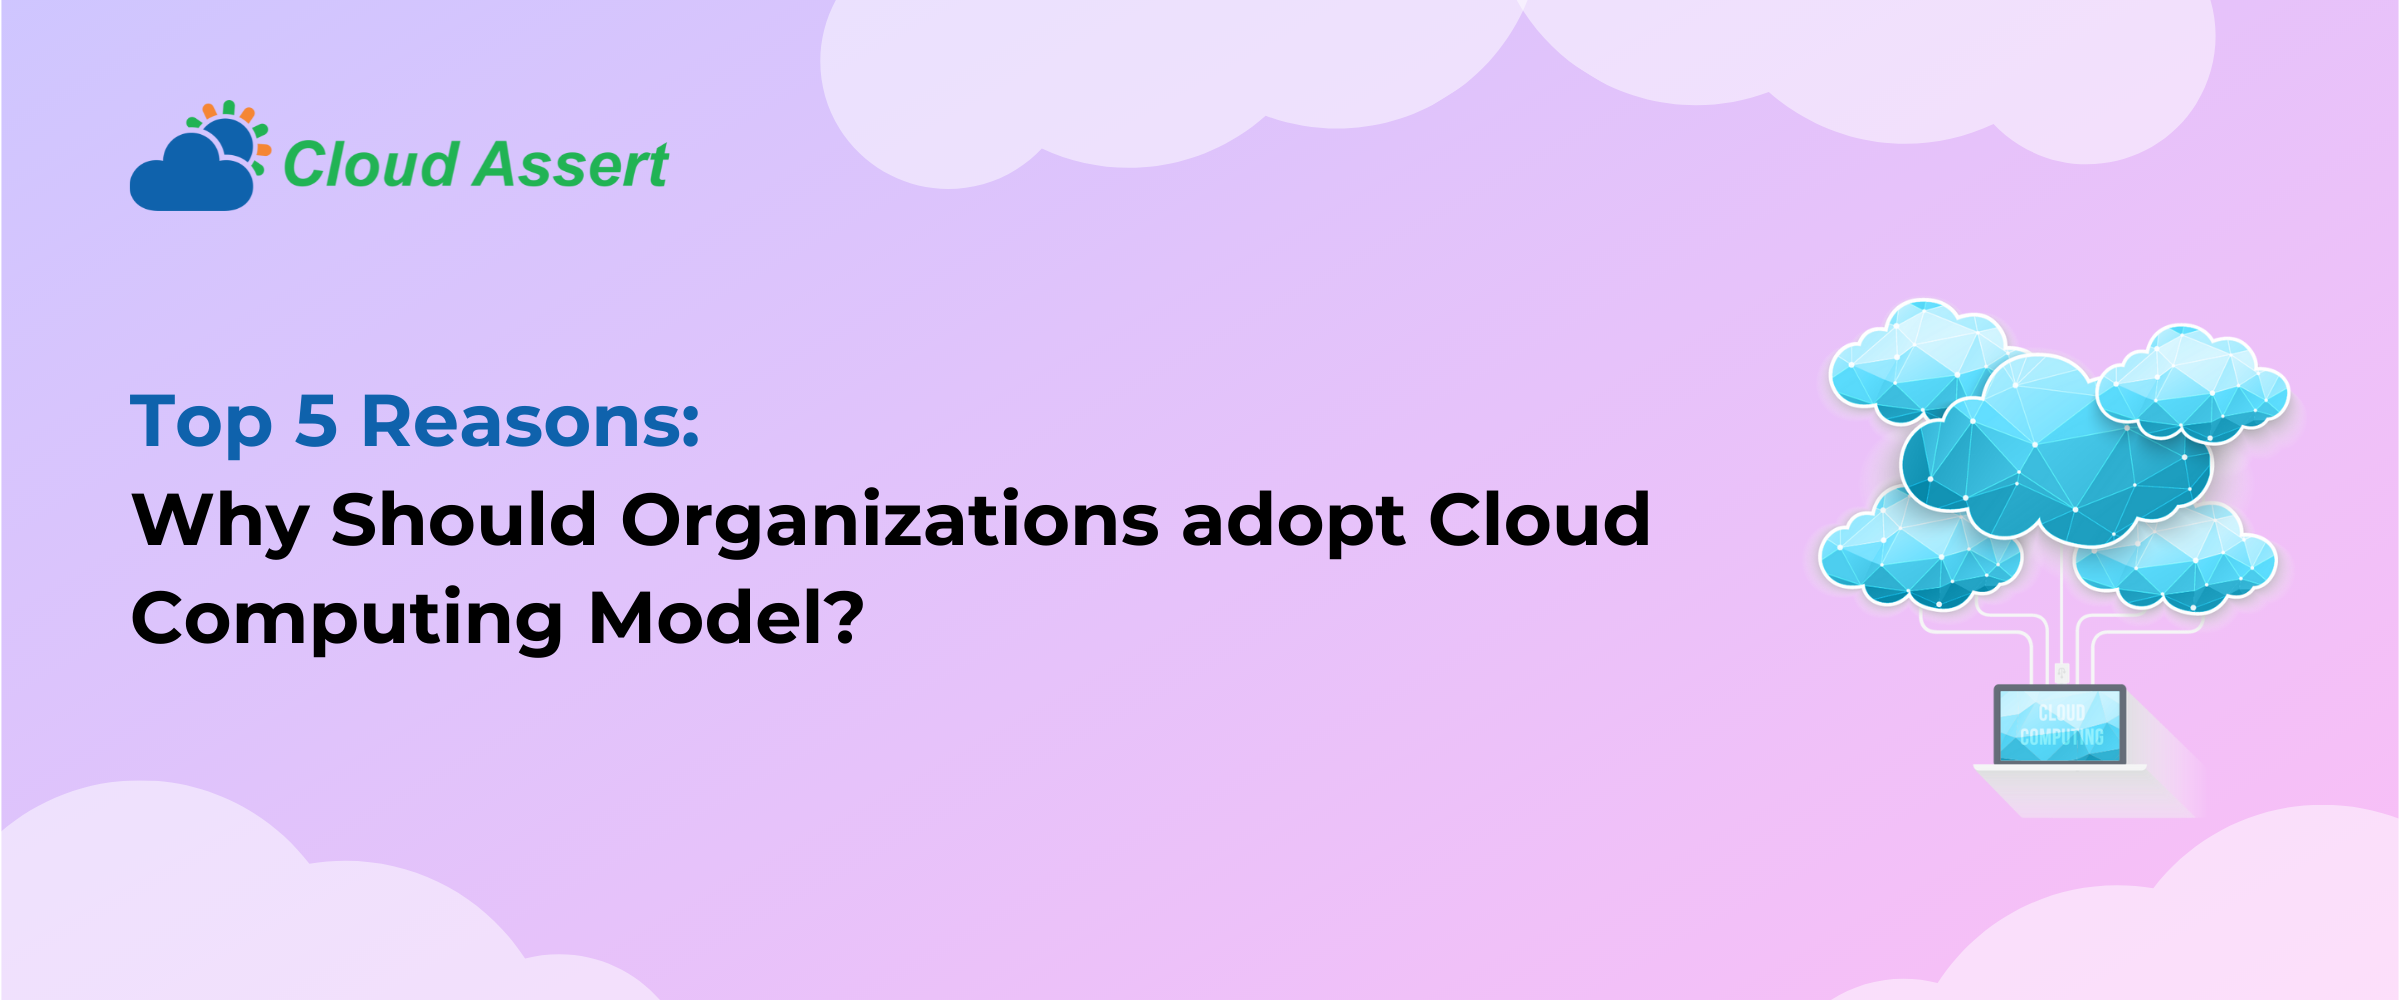 Top 5 Reasons: Why should organizations adopt cloud computing model?